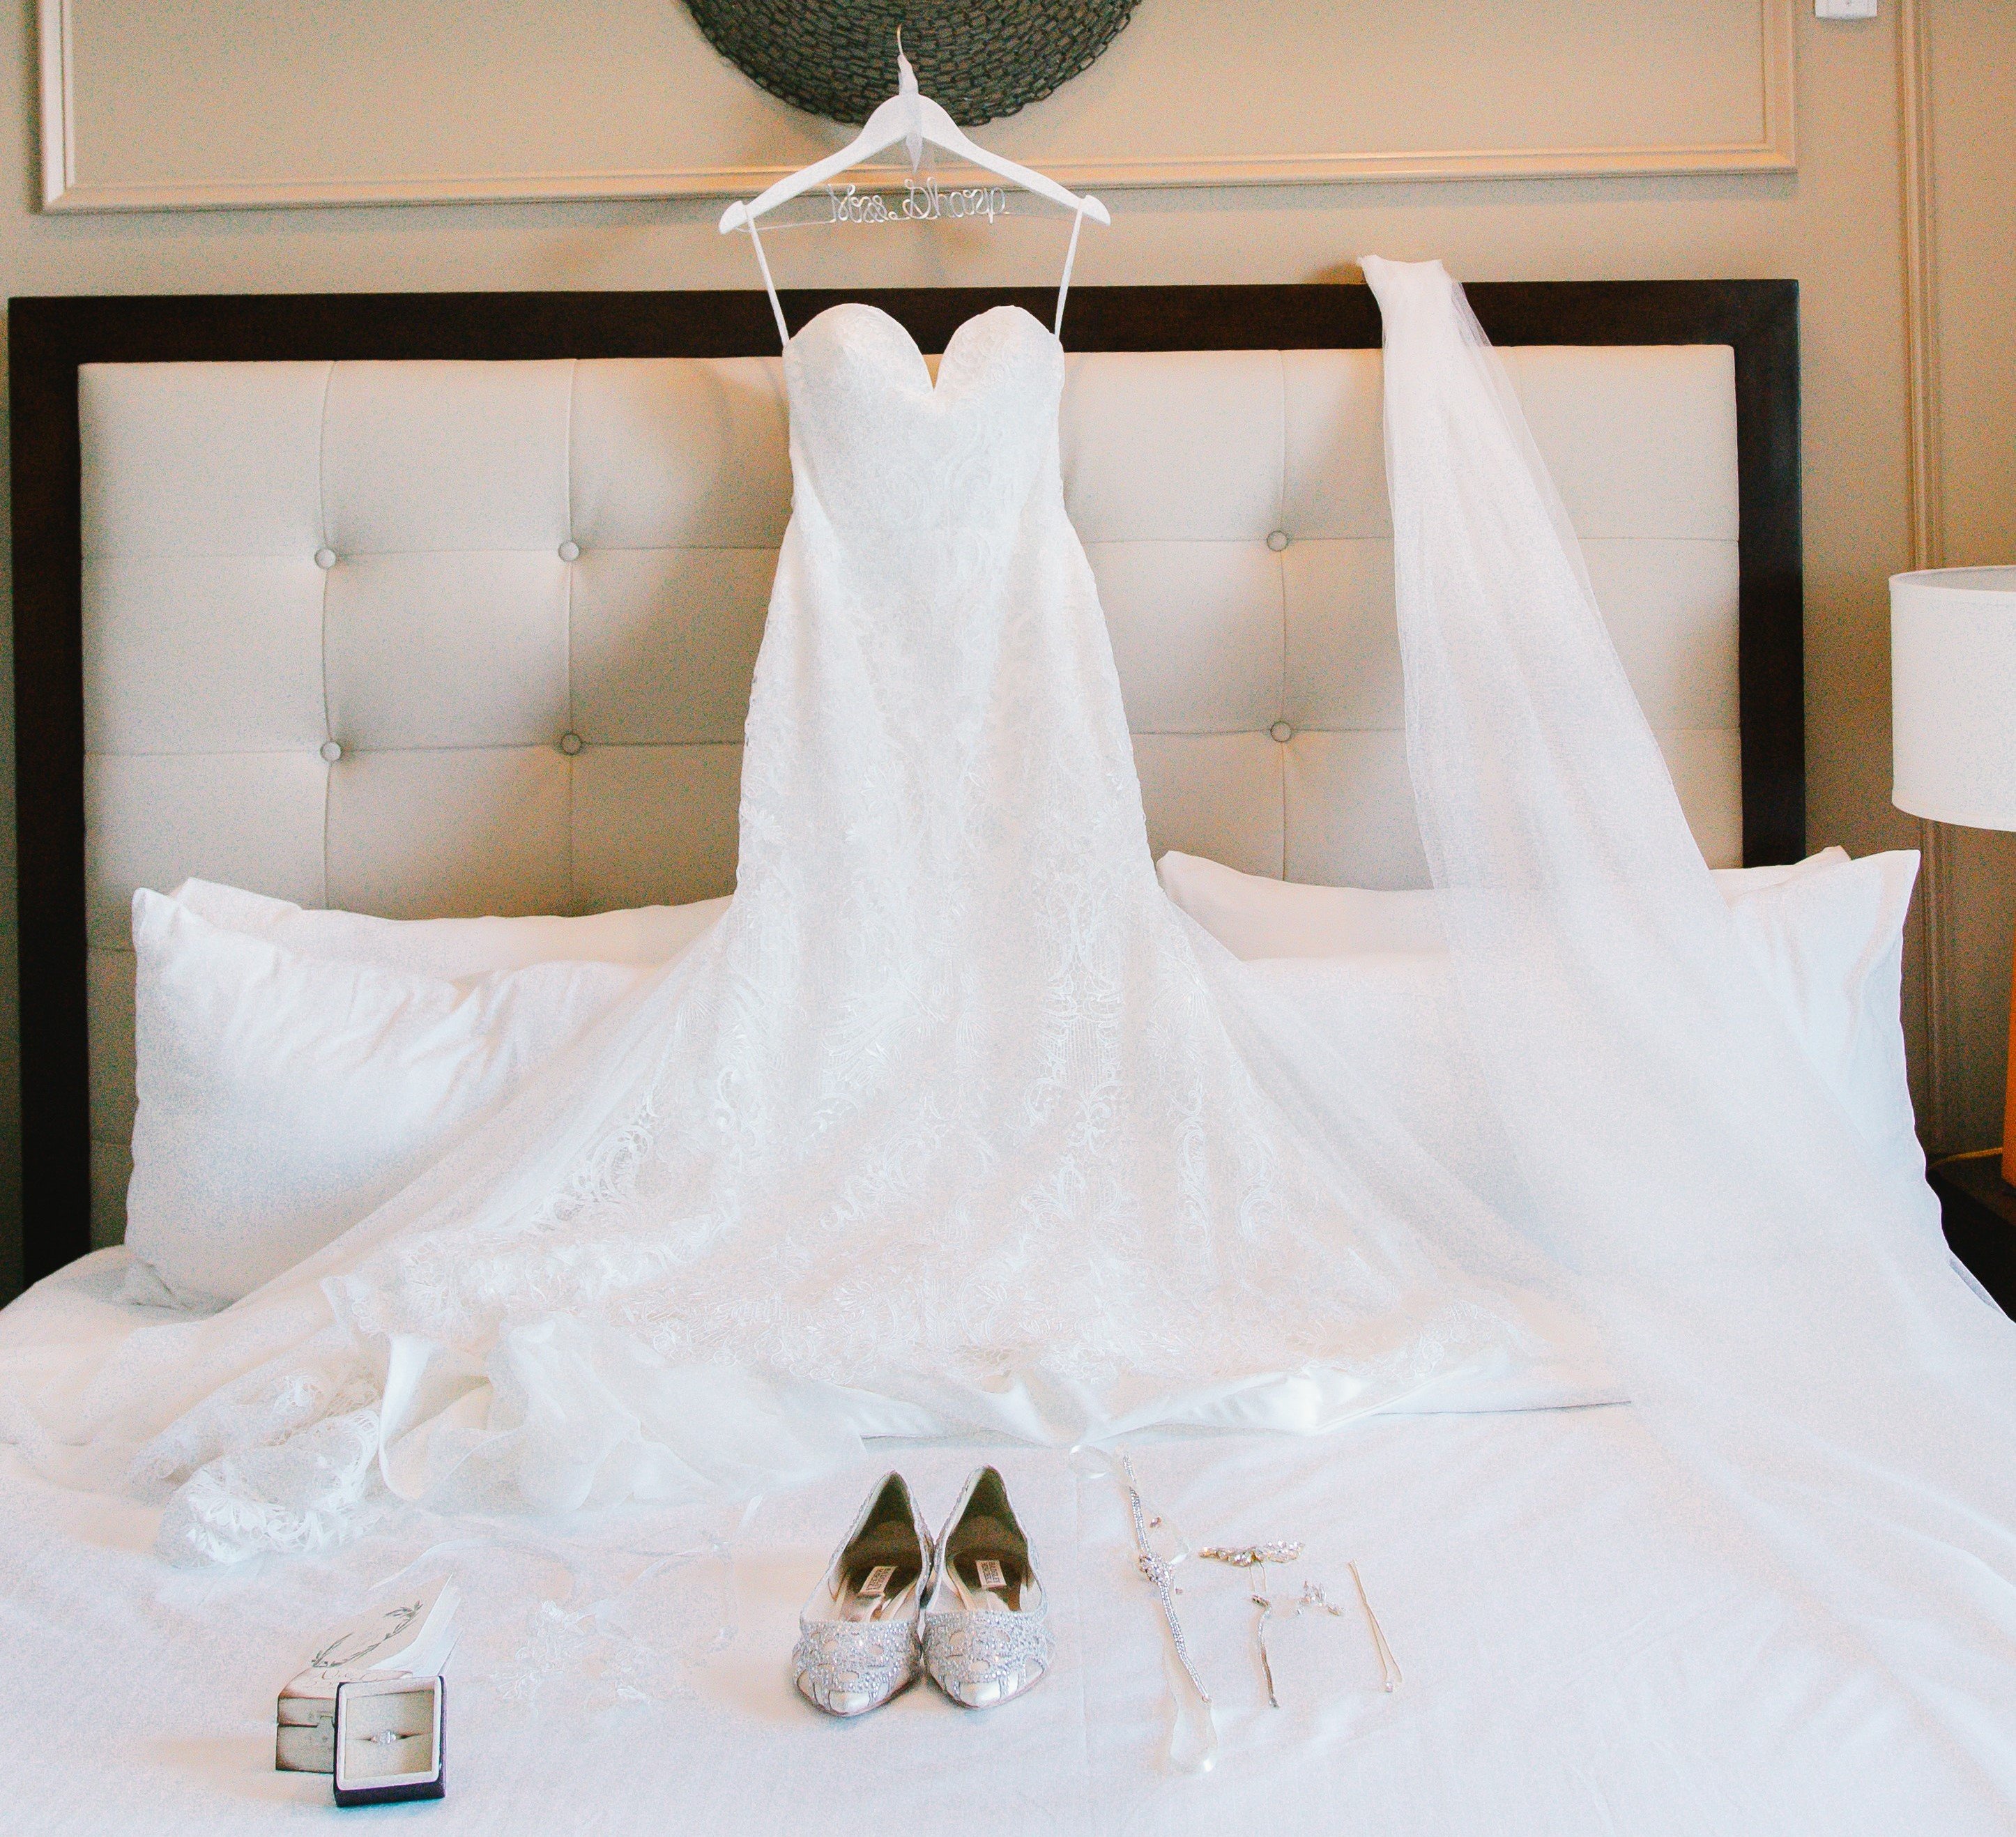 Traje de novia blanco sobre la cama. | Foto: Pexels